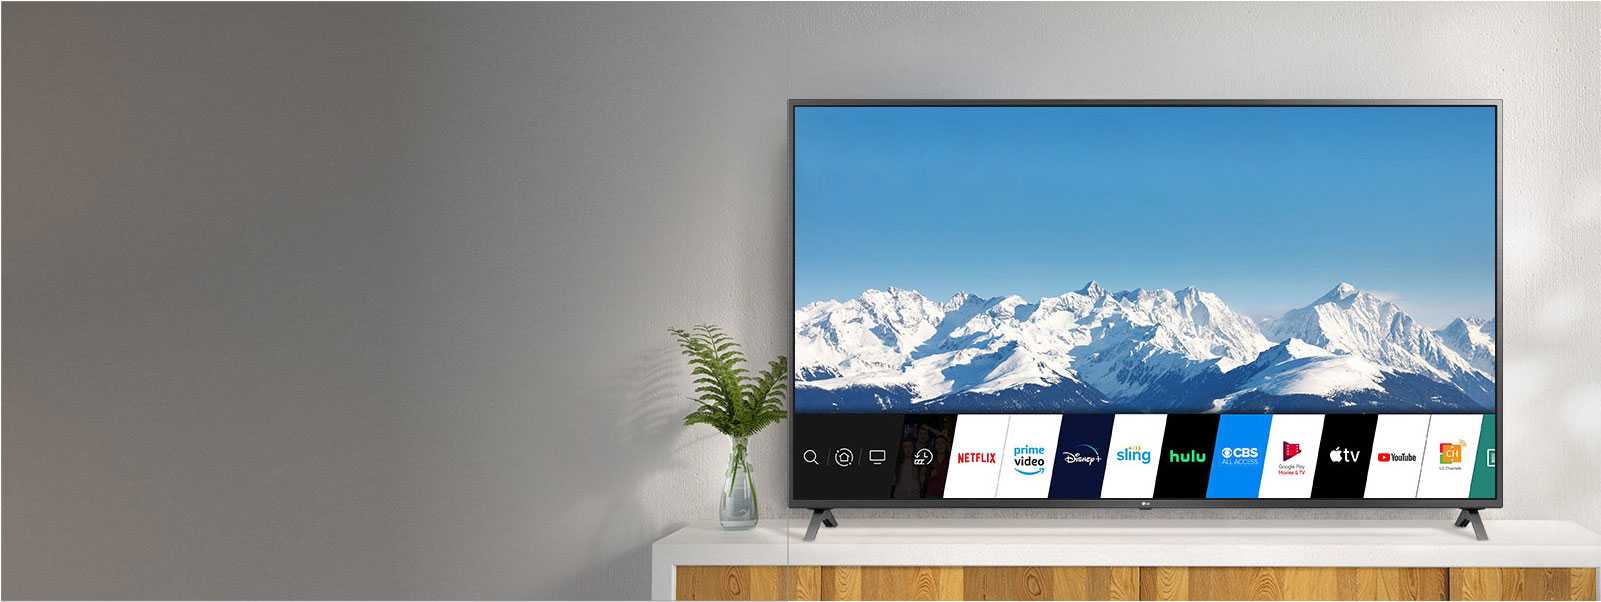 Телевизор lcd 70" 4k 70un71006la lg — купить, цена и характеристики, отзывы